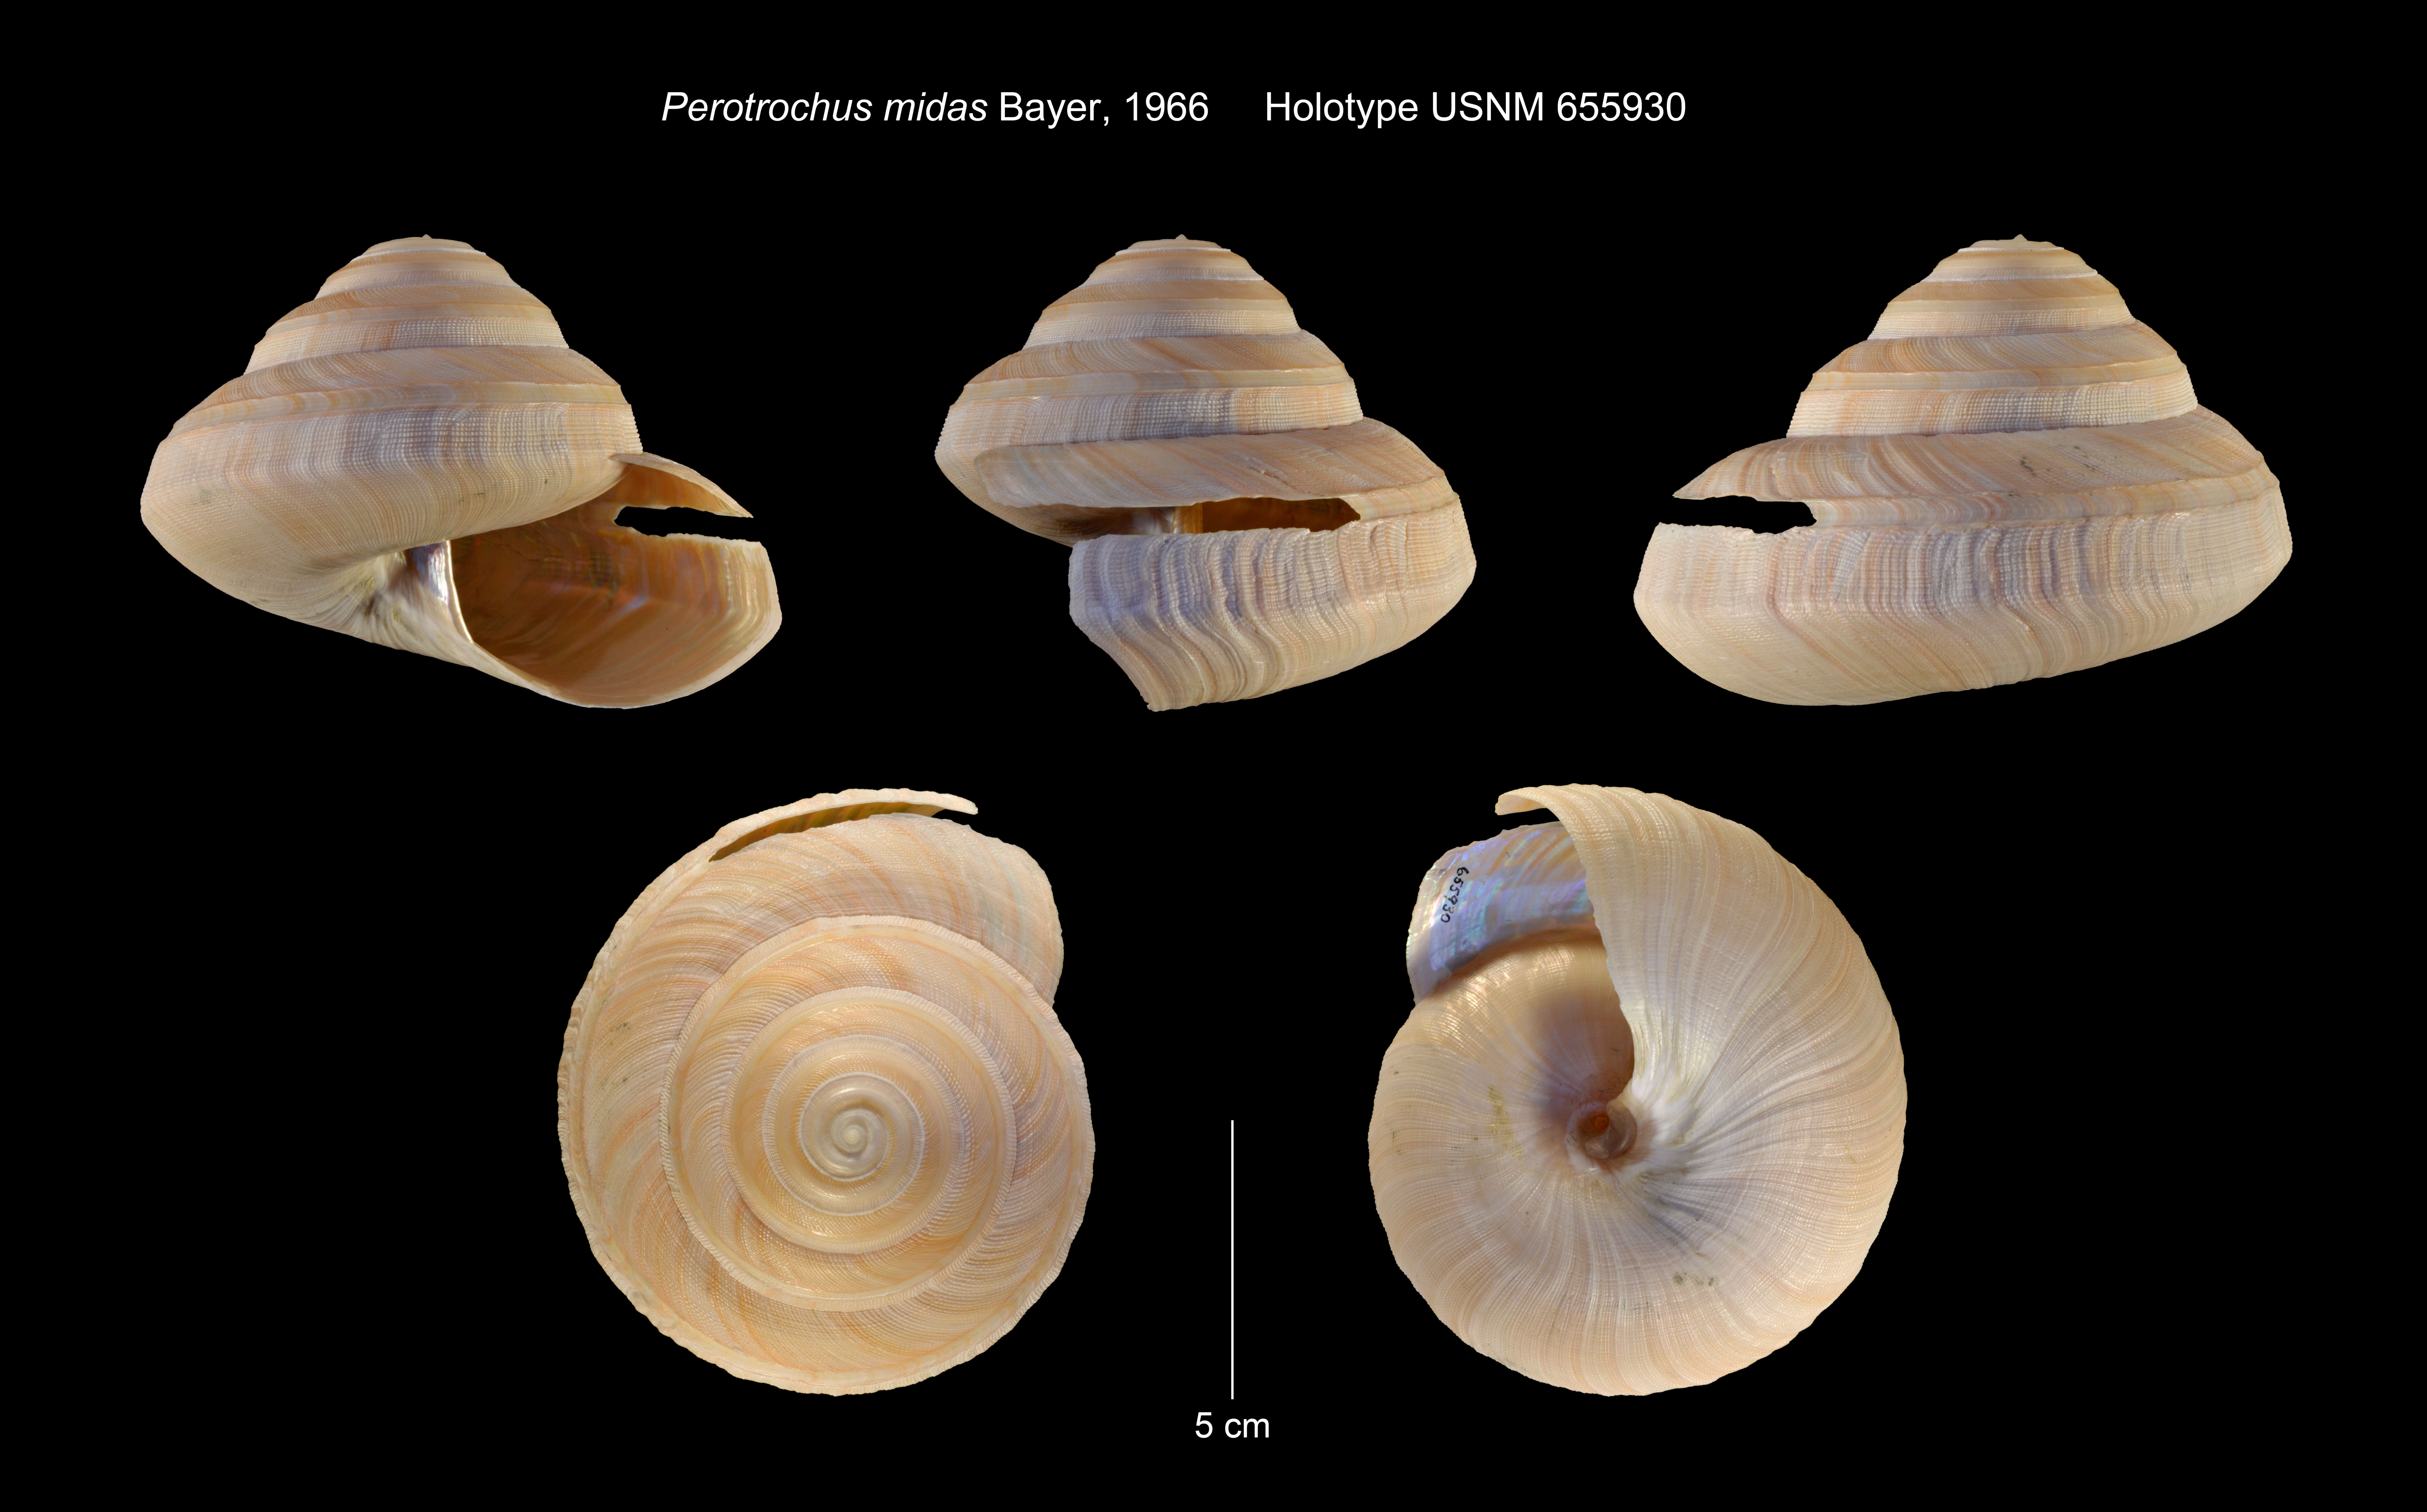 Image of Bayerotrochus midas (Bayer 1965)